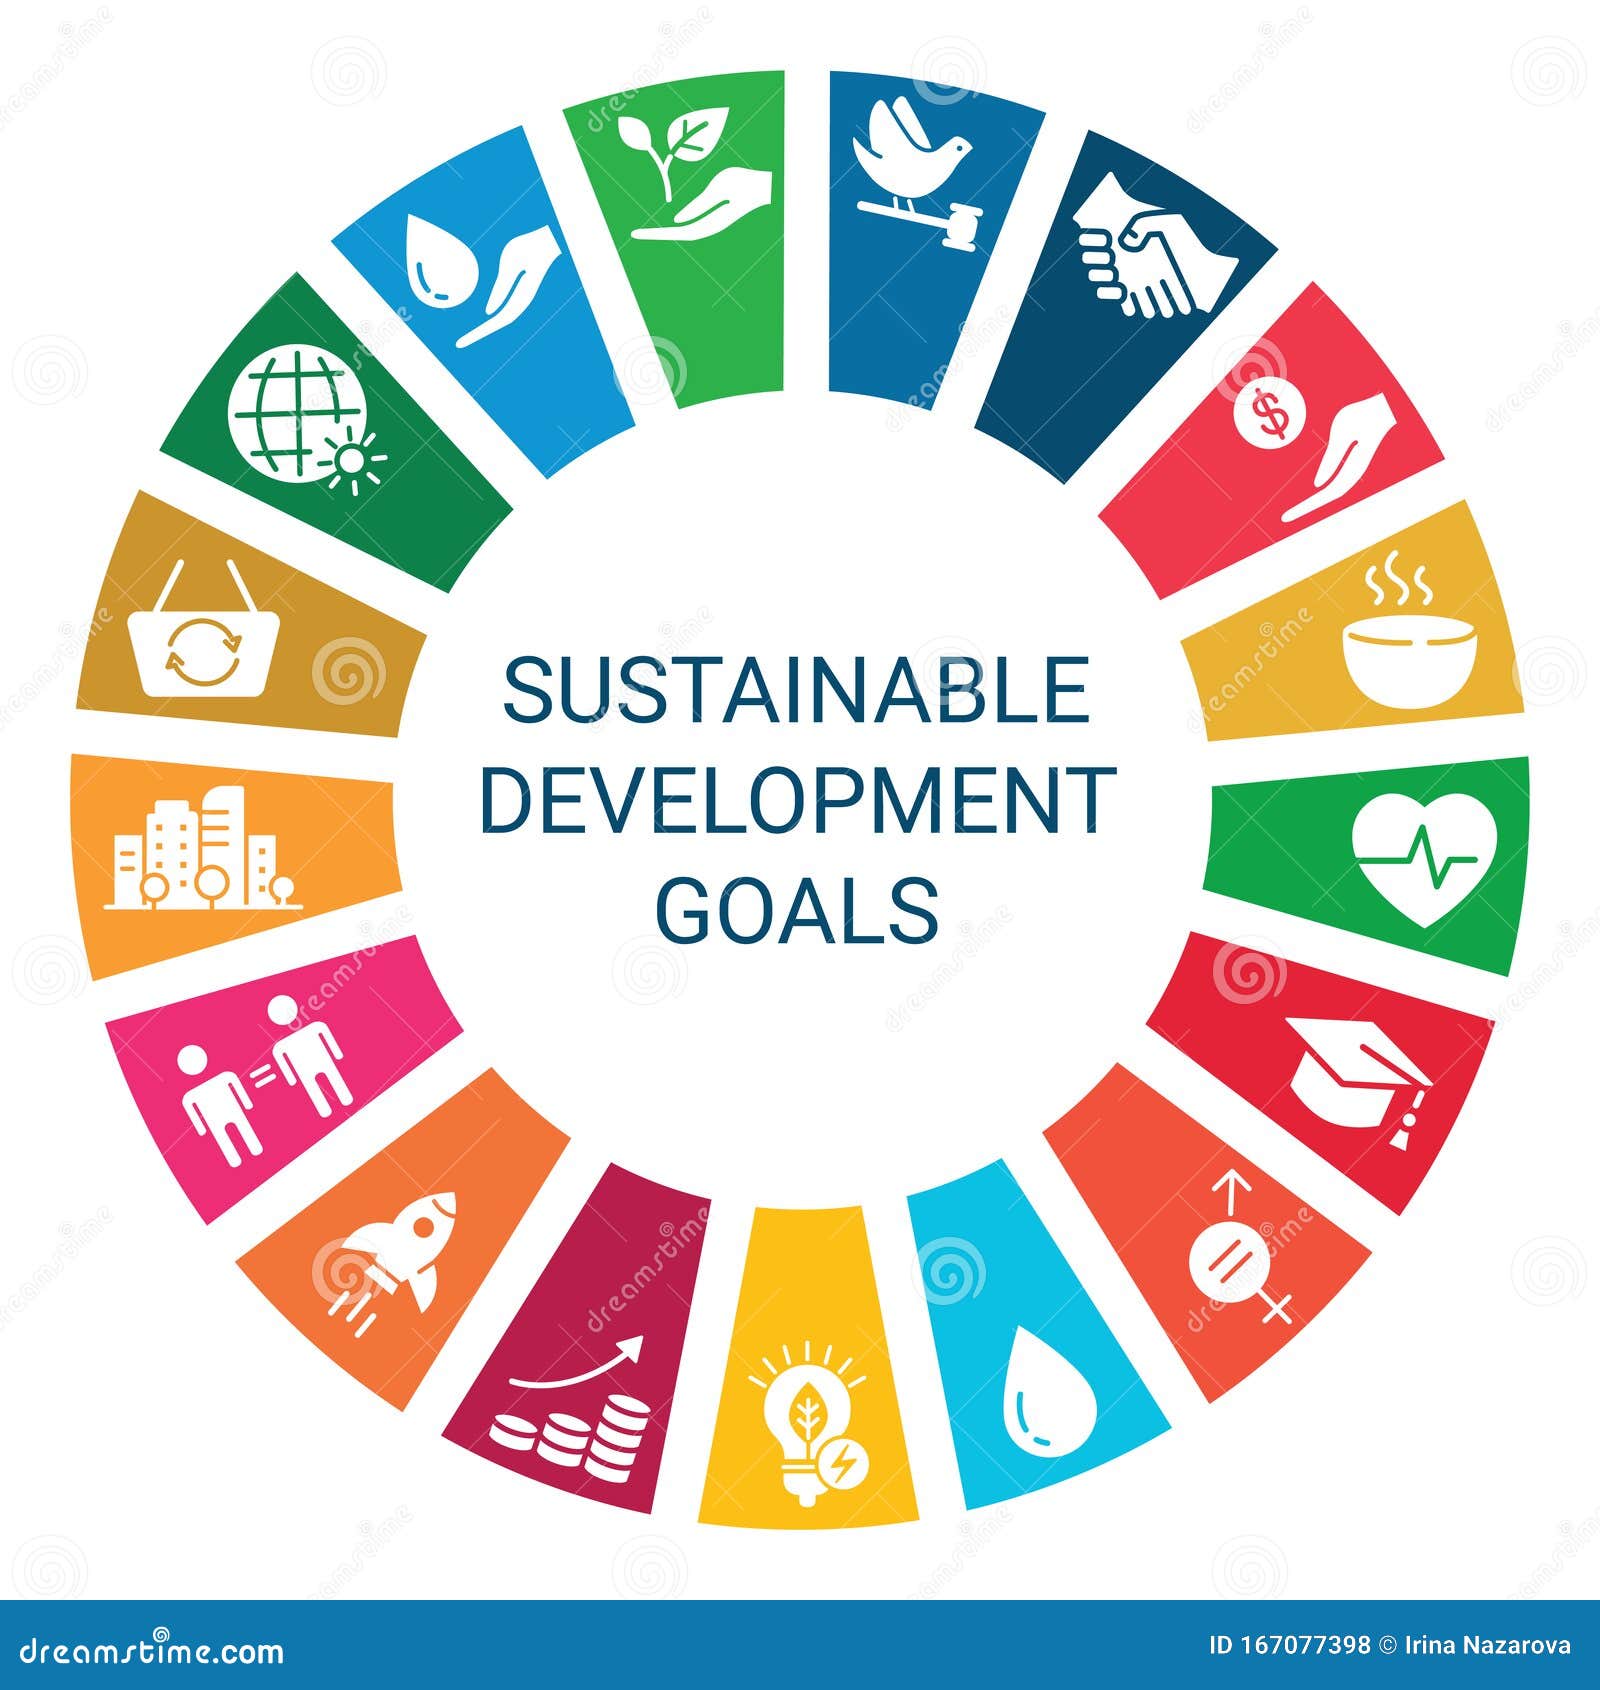 Sustainable Development Goal 2050 Cartoon Vector | CartoonDealer.com ...